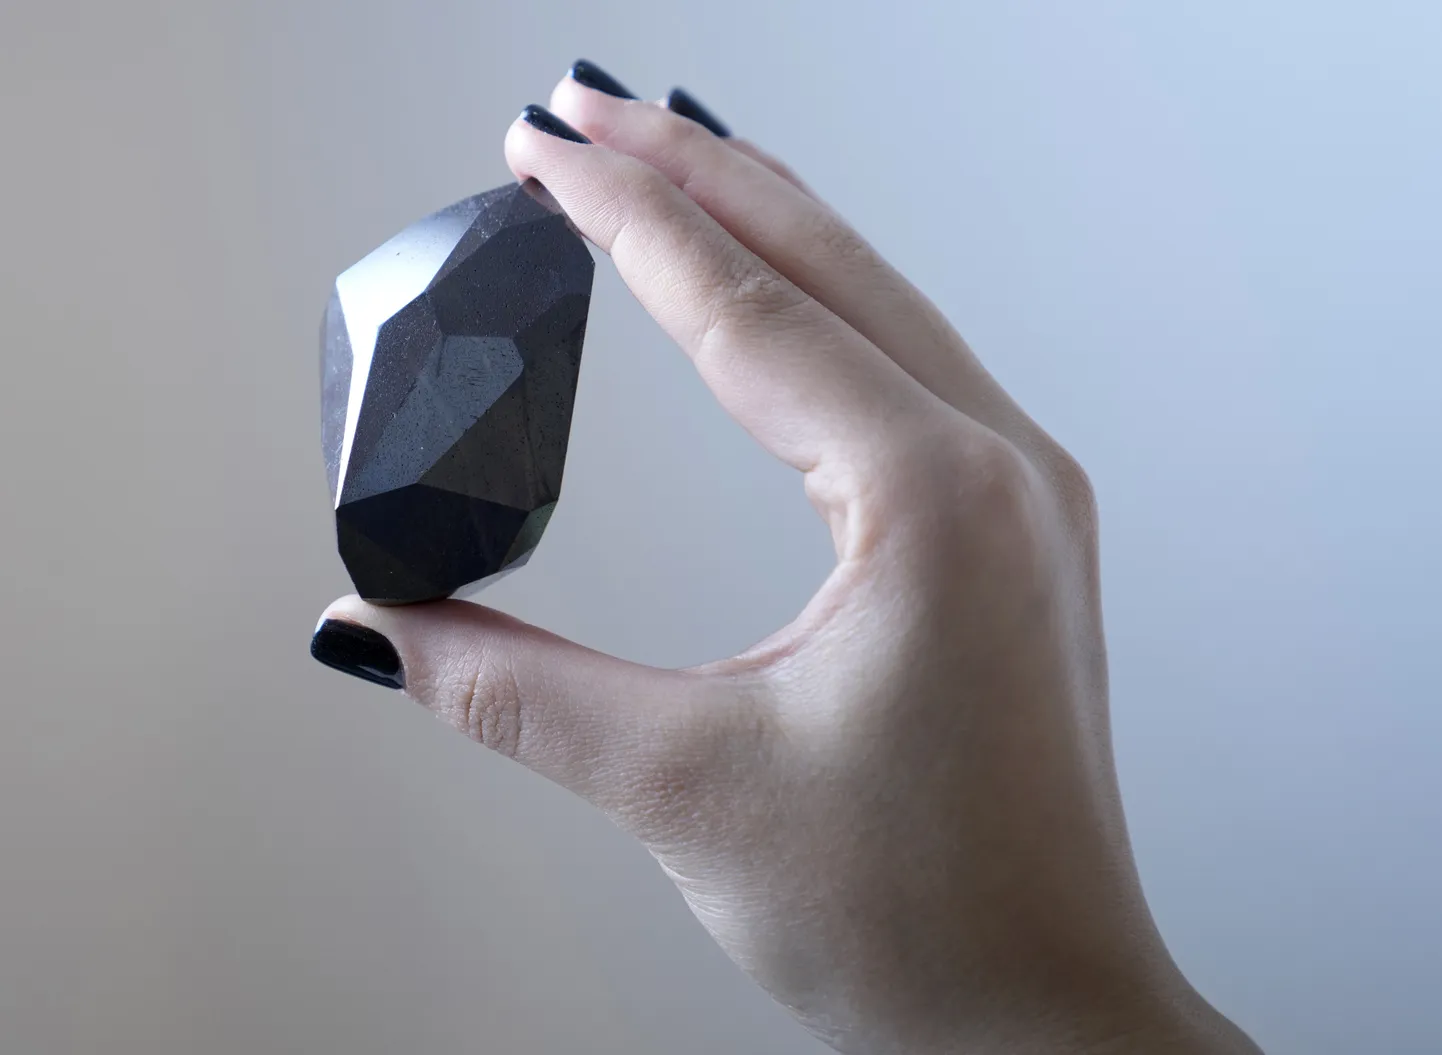 Sotheby'se oksjonimaja Dubai esindaja näitas musta värvi teemanti